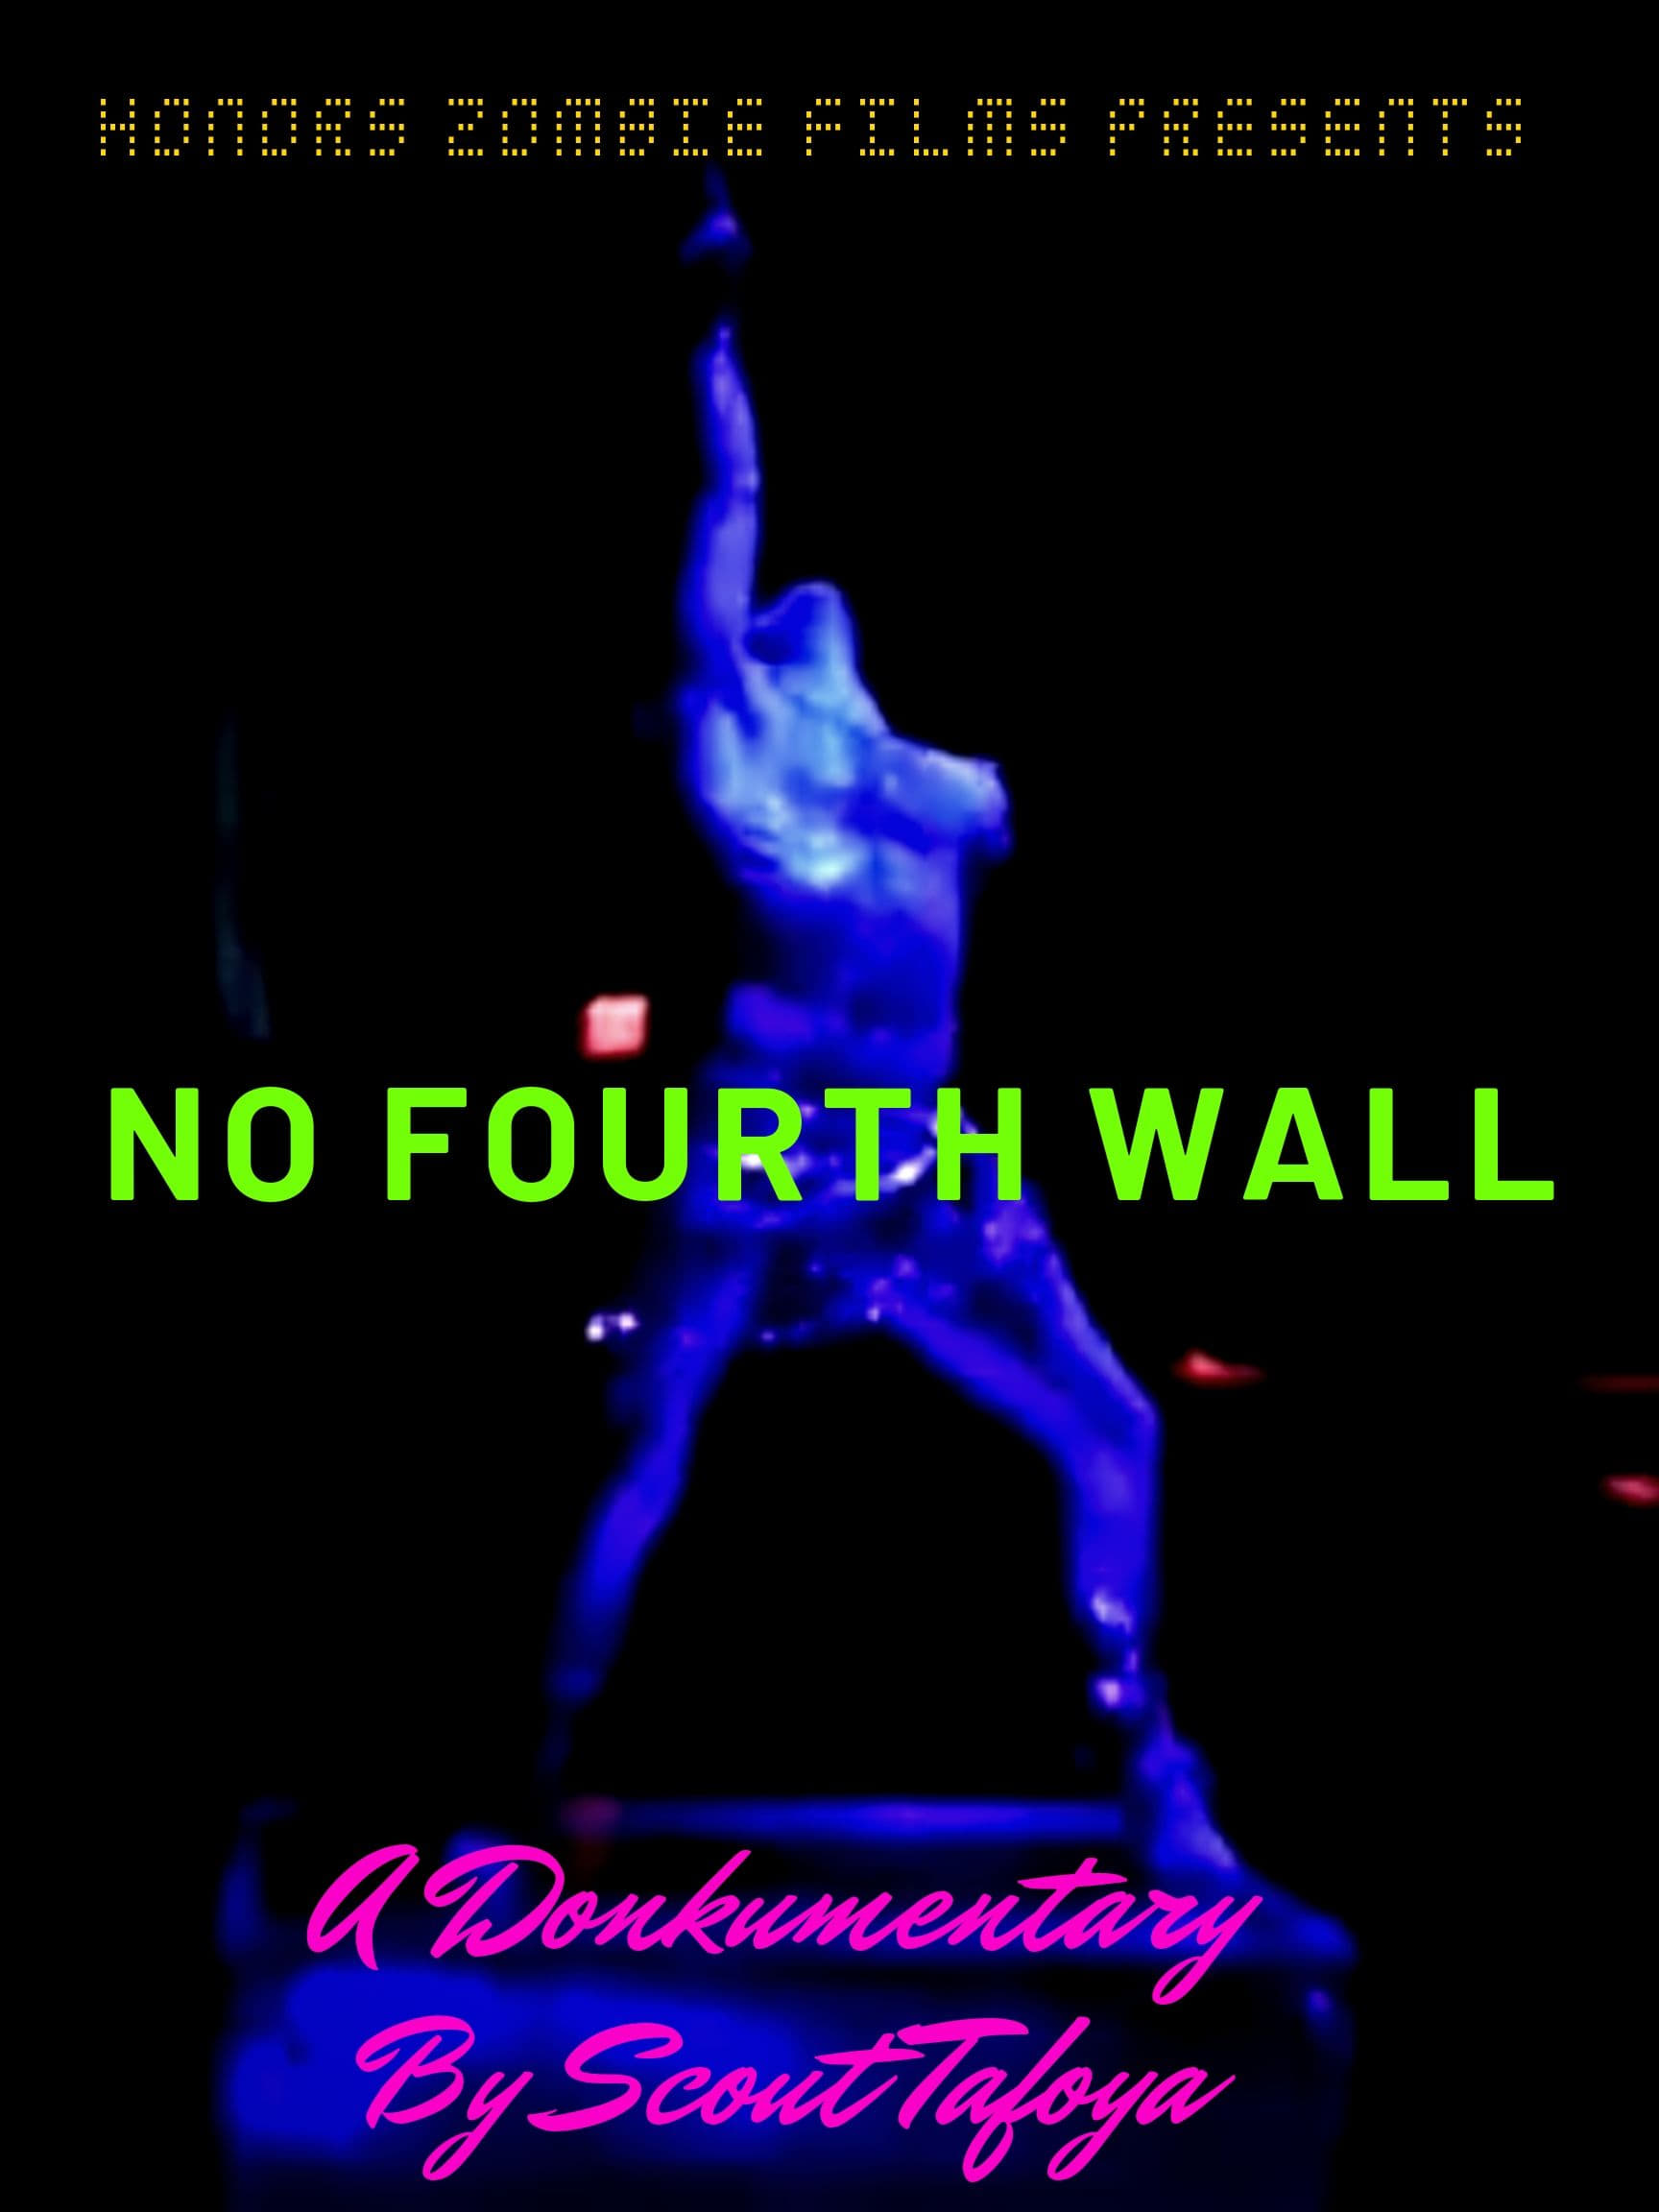 No fourth wall